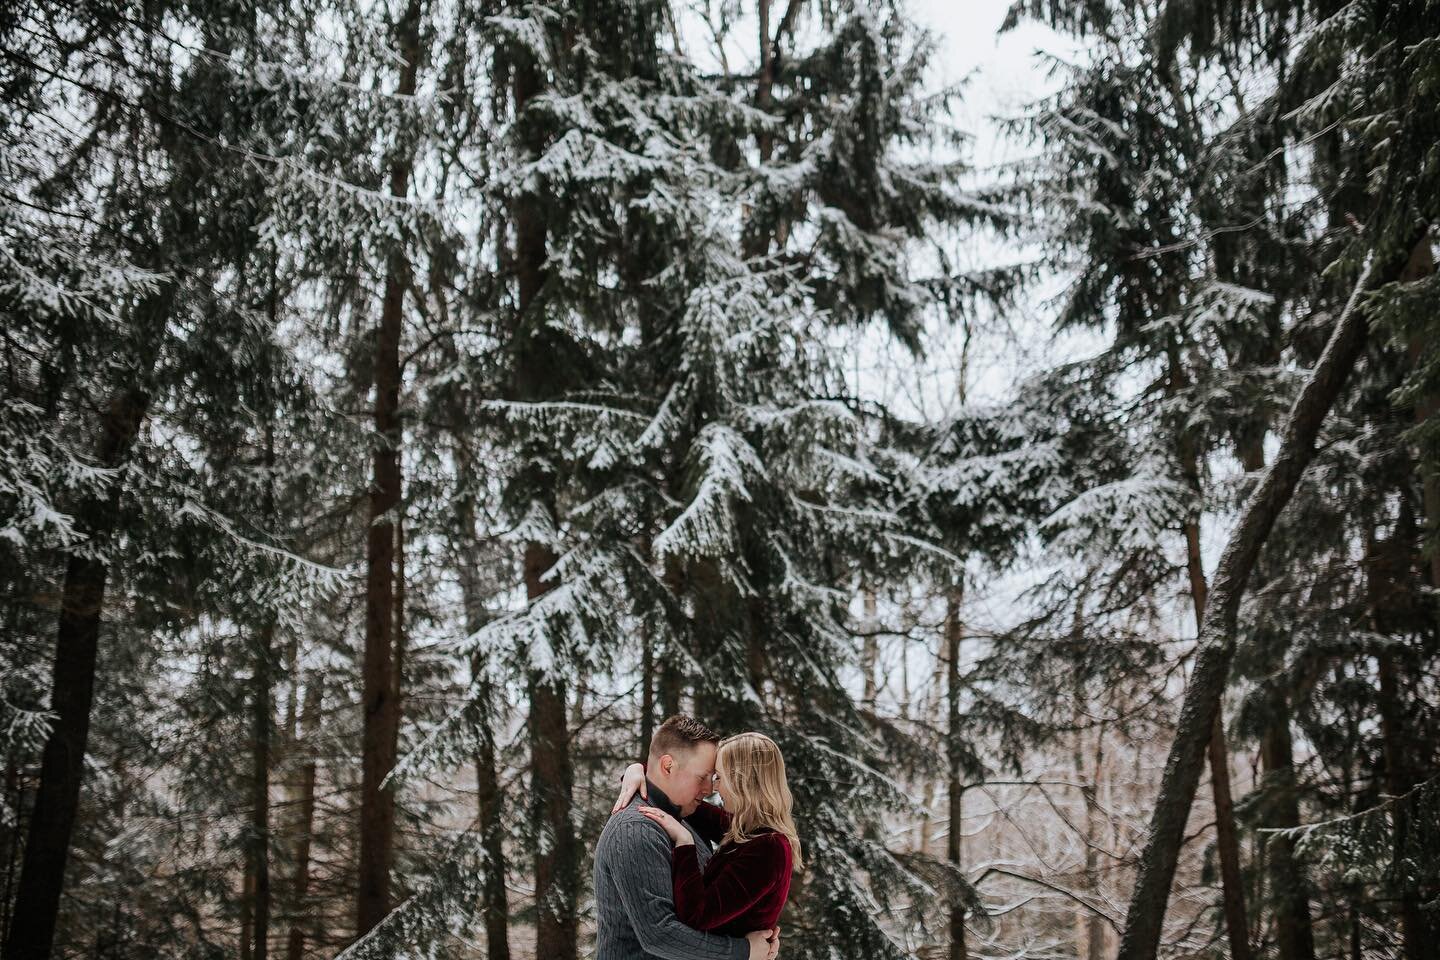 Snow covered pines 😍

@laurenmathias